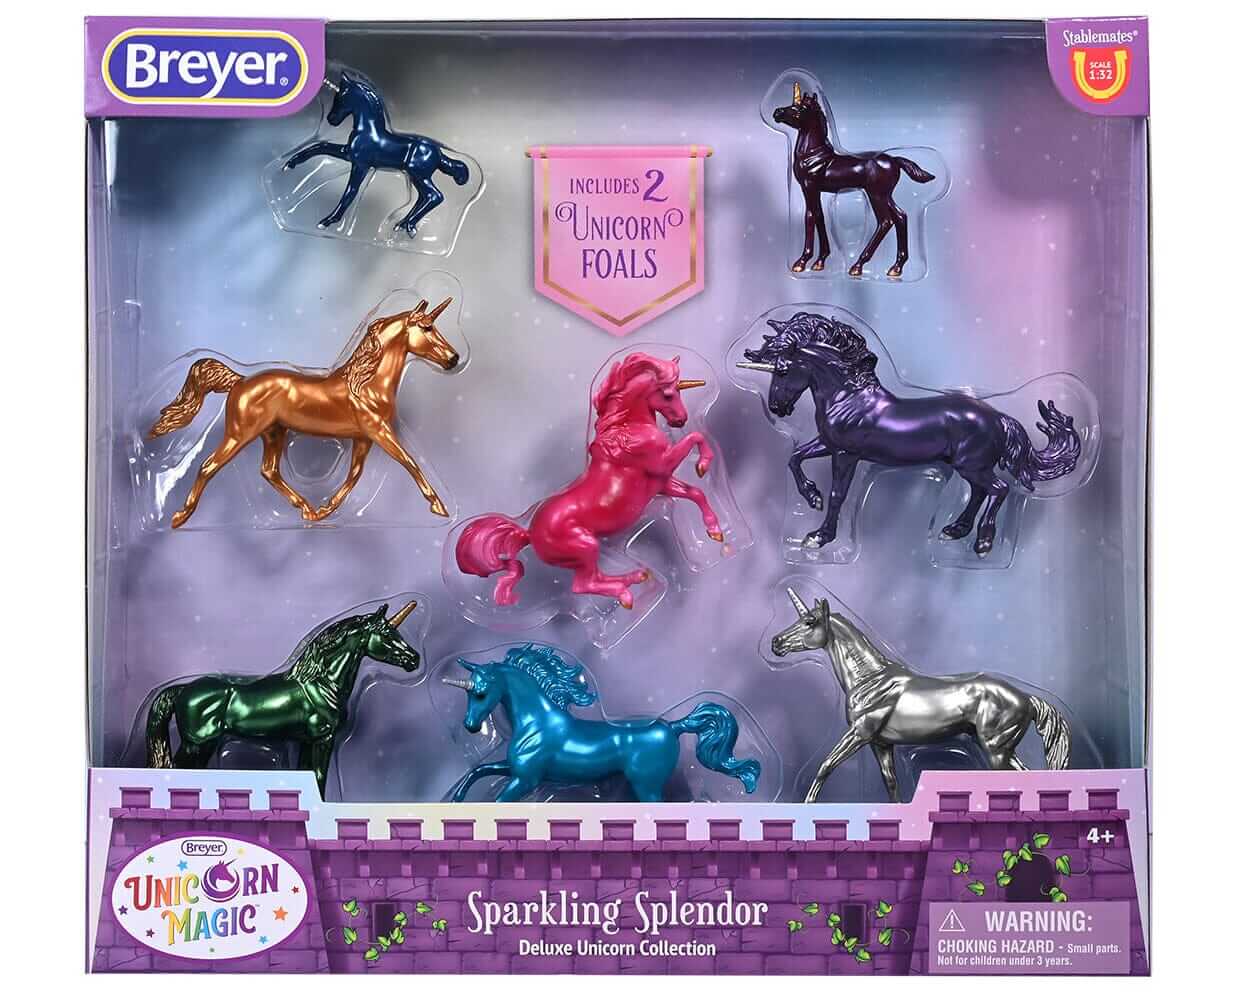 Breyer Sparkling Splendor Deluxe Unicorn Collection Packaging